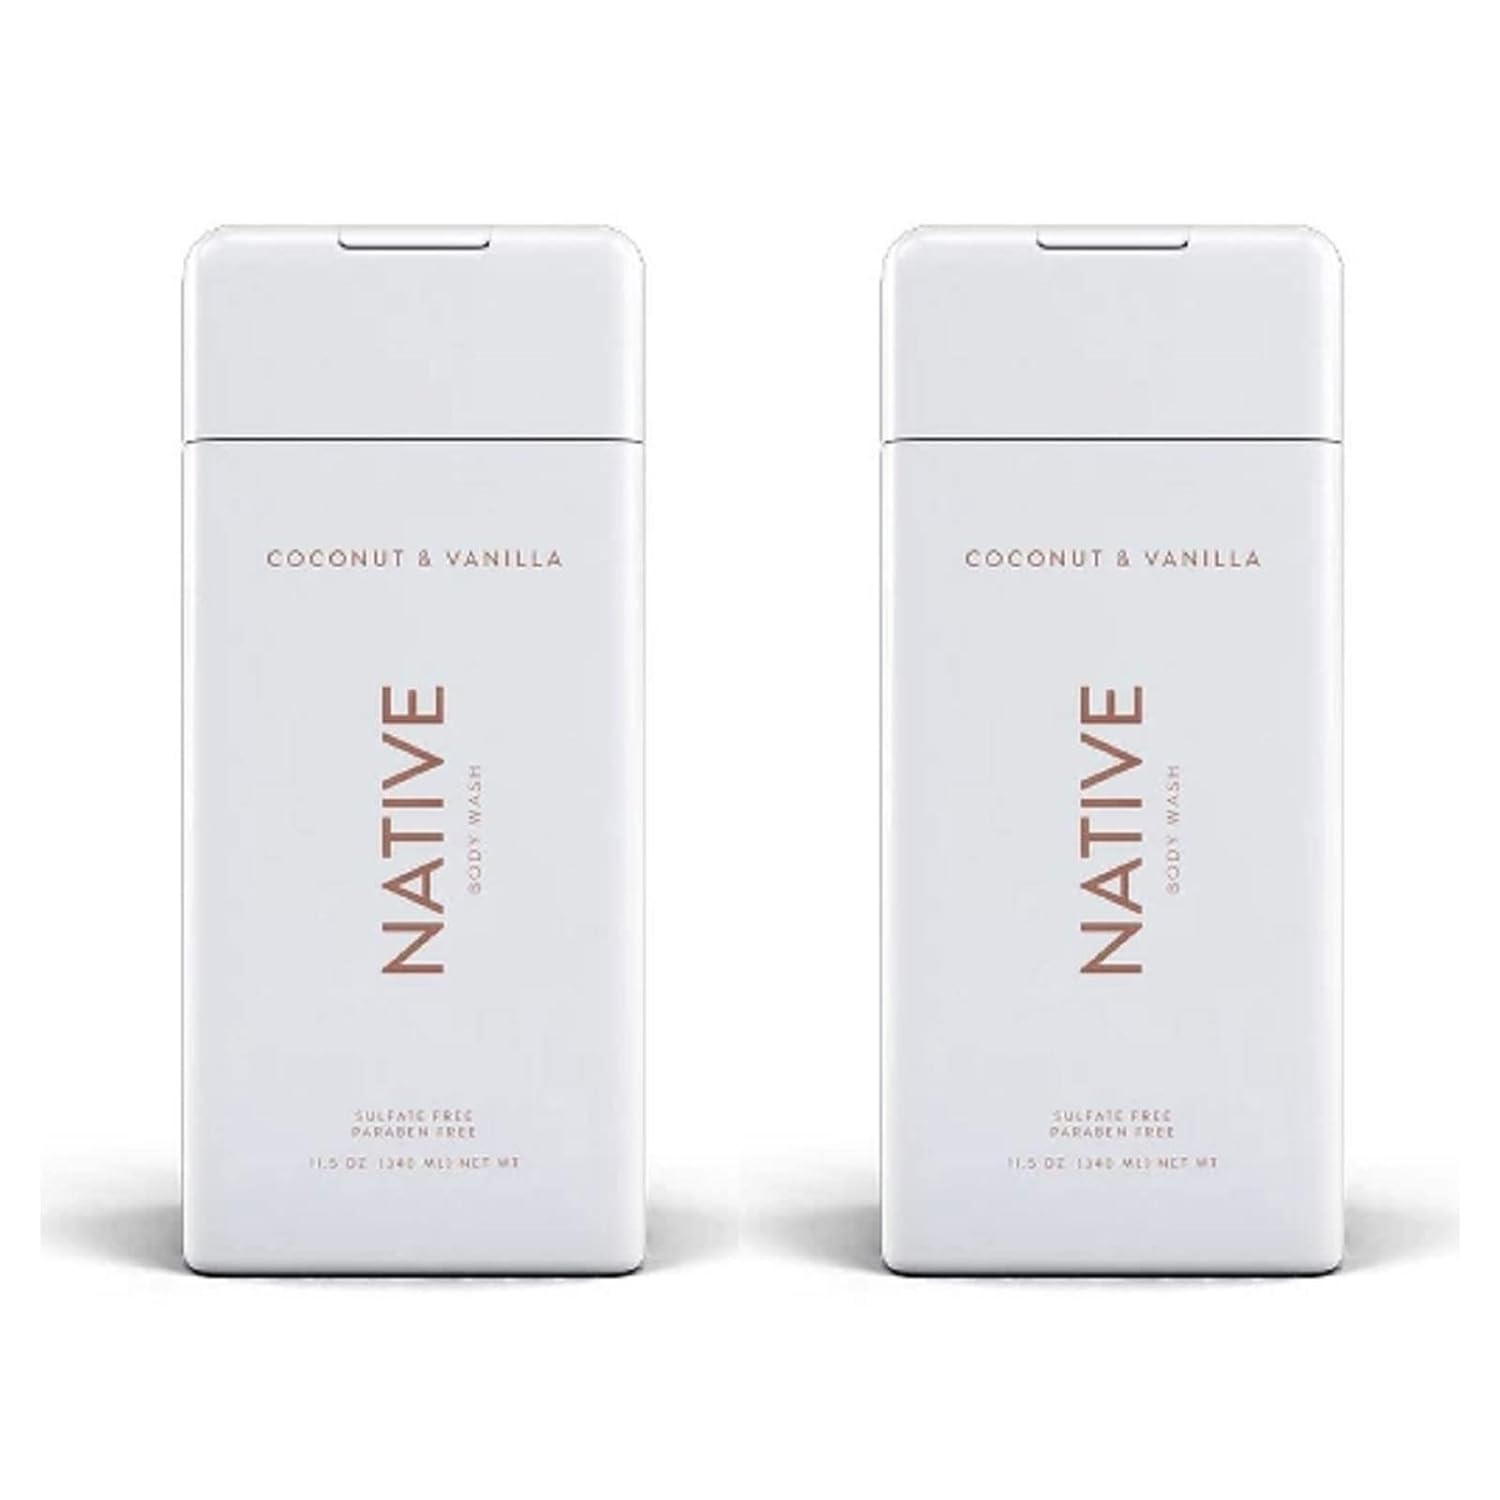 NATIVE Body Wash - Coconut & Vanilla…